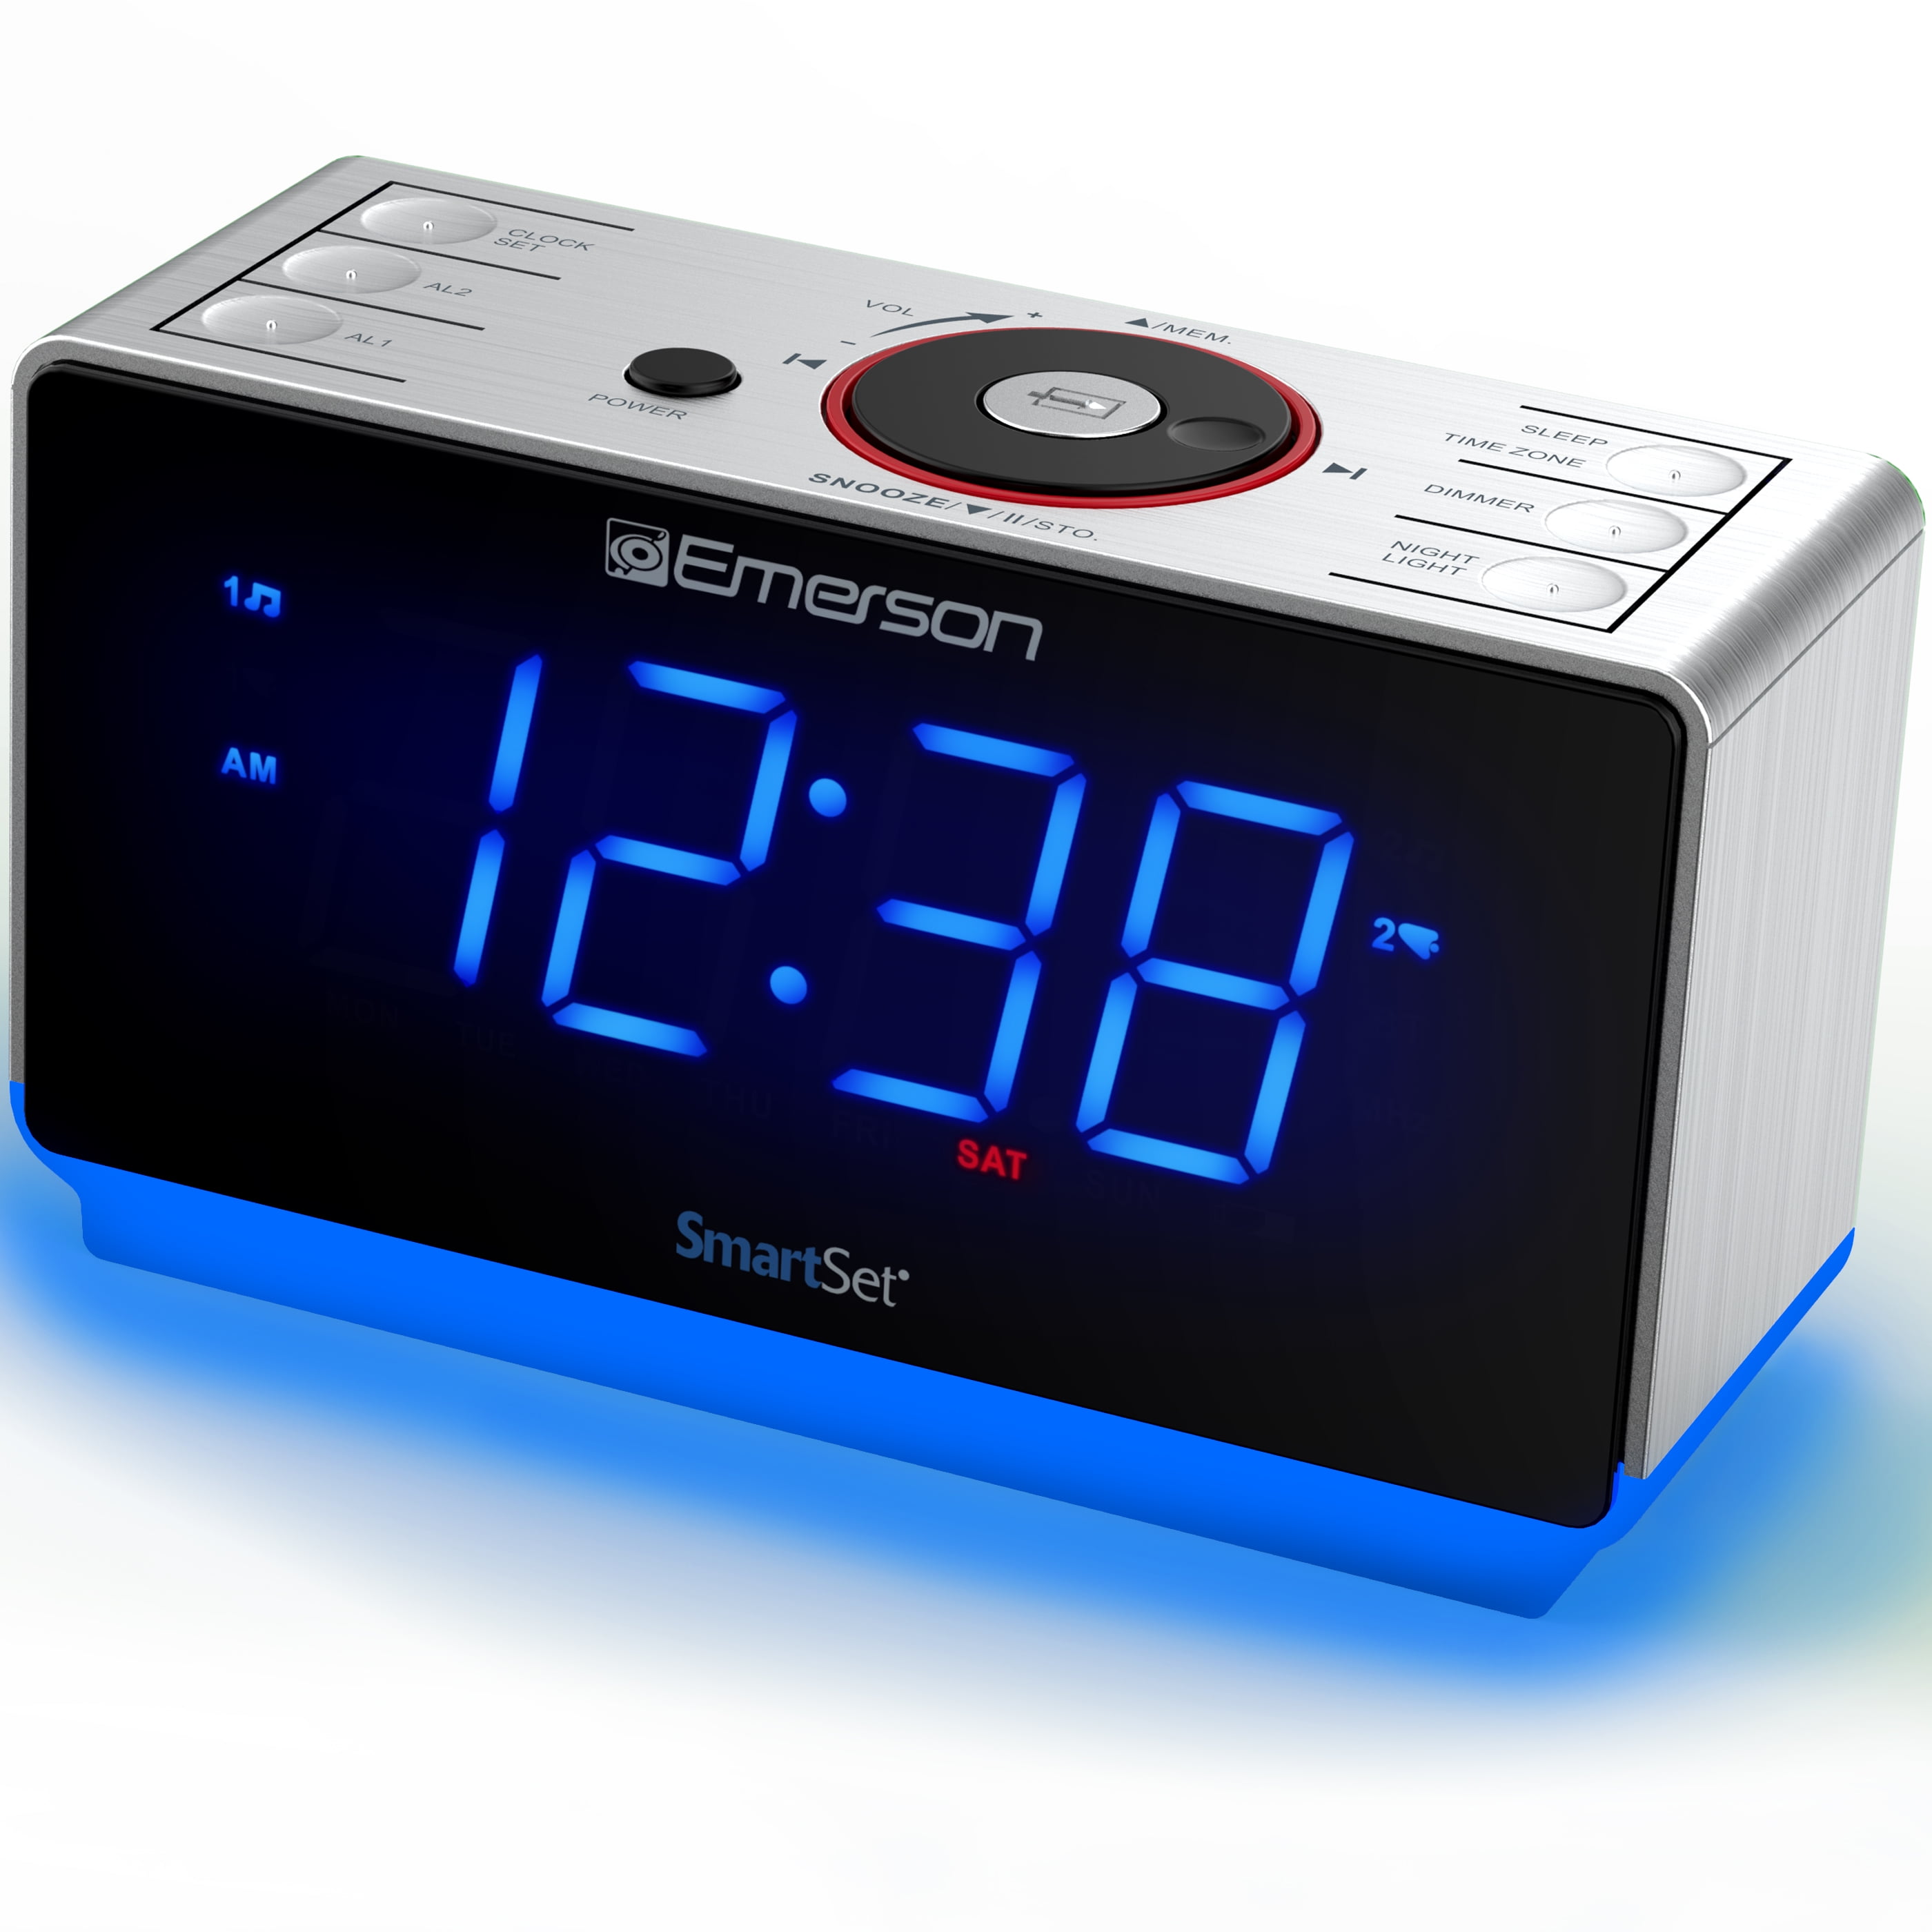 Emerson Smart Set FM Radio Alarm Clock Dual Alarm Speaker Red LED Display NEW 